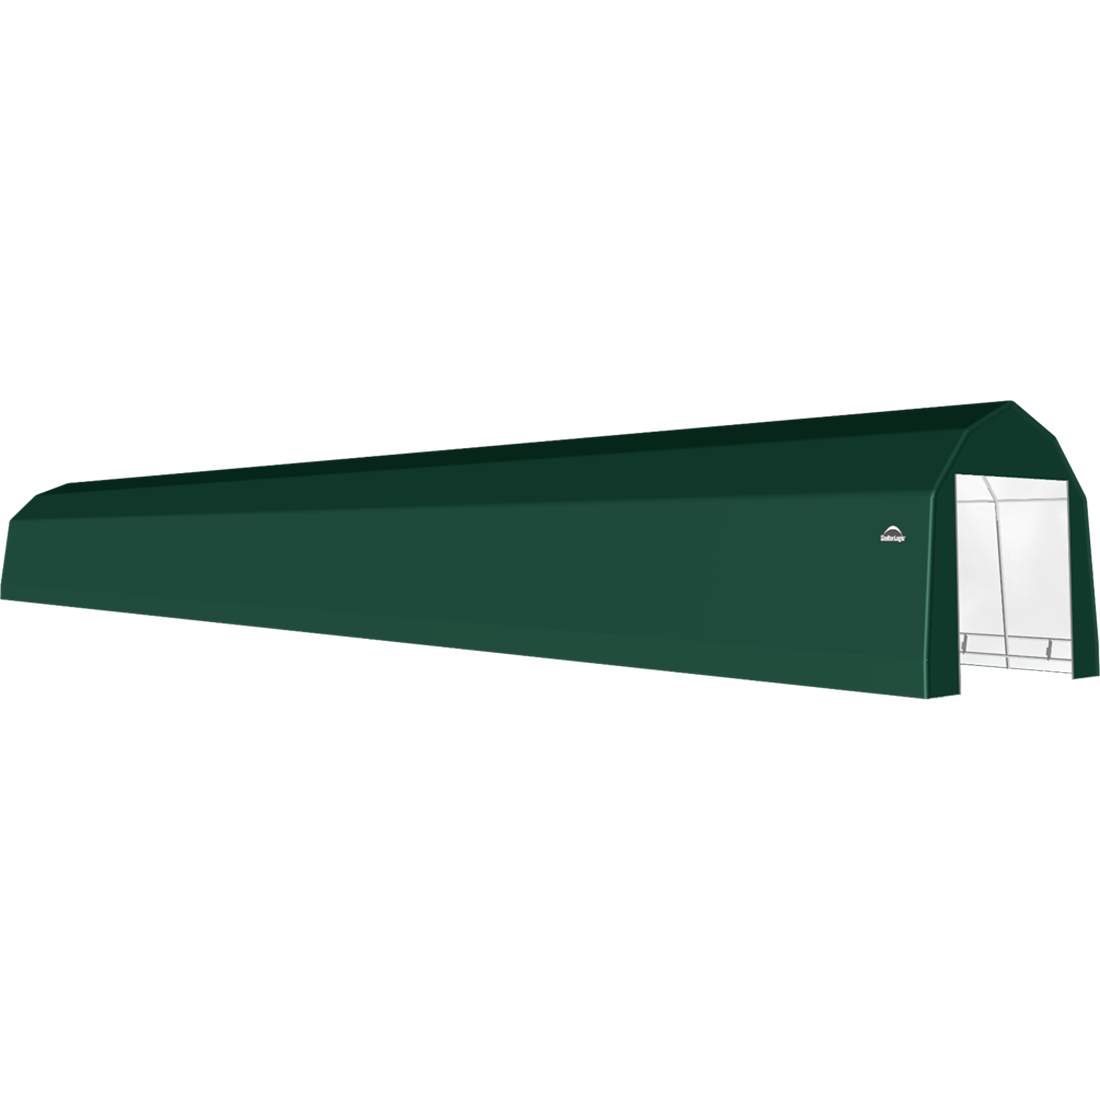 ShelterTech SP Series Barn Shelter, 12 ft. x 96 ft. x 11 ft. Heavy Duty PVC 14.5 oz. Green